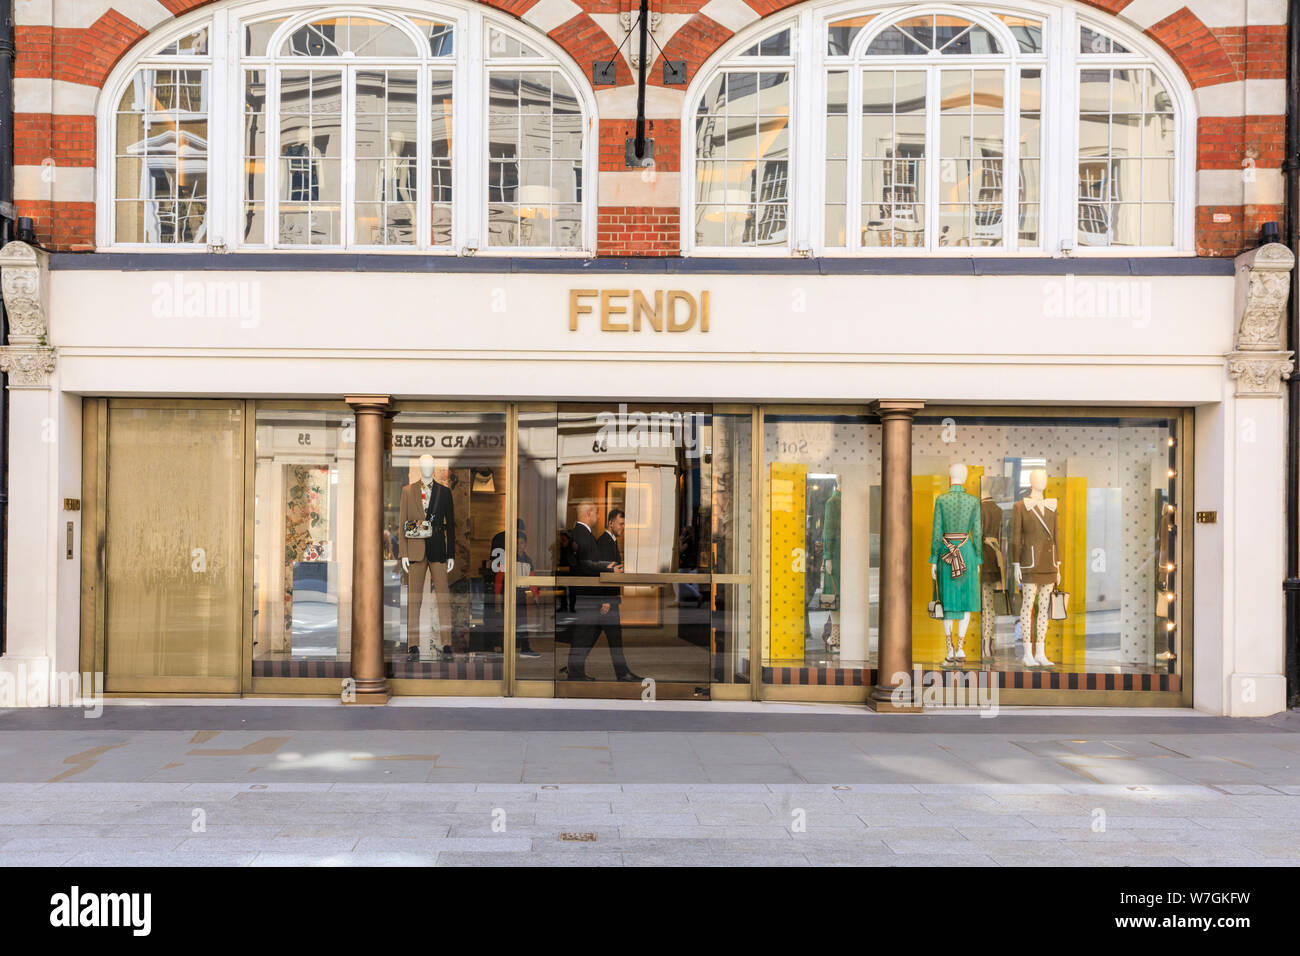 Fendi brand fashion and retail store, shop exterior in New Bond Street, Mayfair, London, UK Photo - Alamy